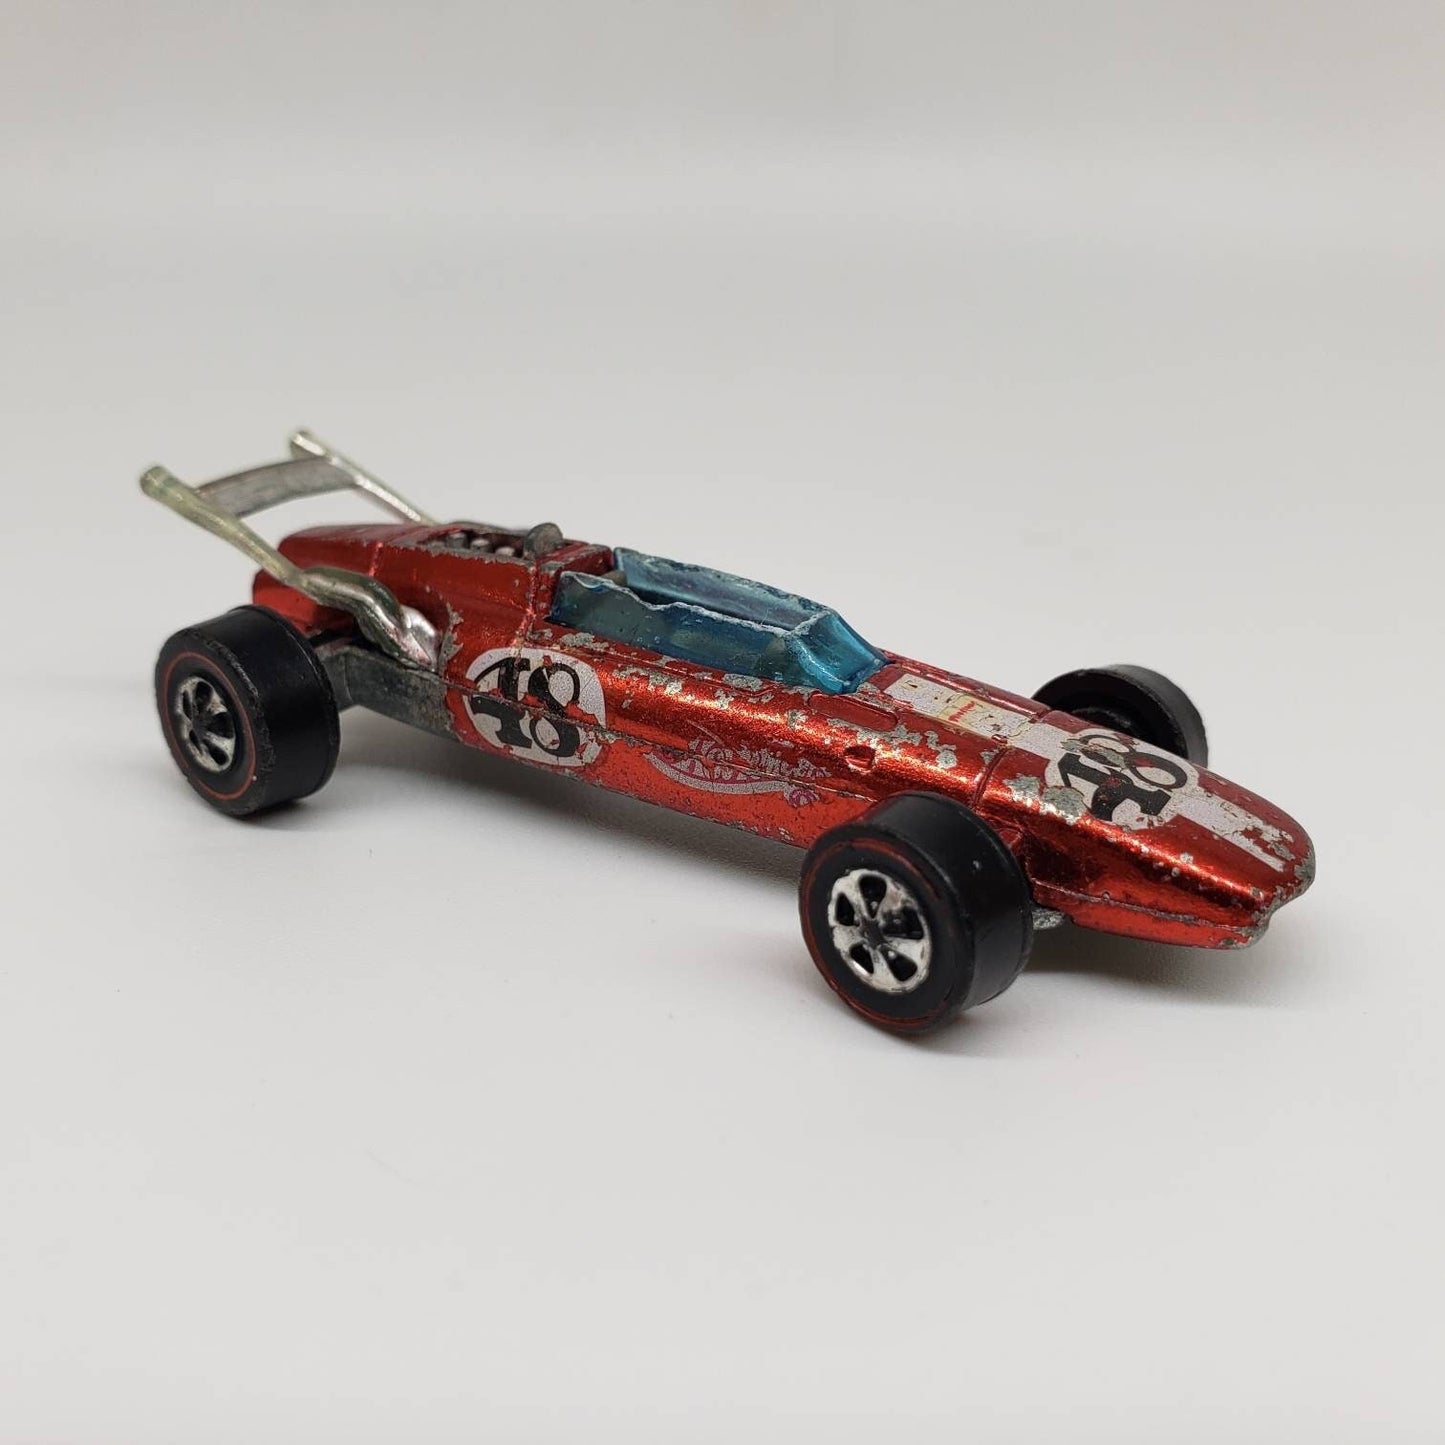 Redline Hot Wheels Indy Eagle Spectraflame Orange Diecast Metal Collectible Vintage Hot Wheels Scale Miniature Model Toy Car